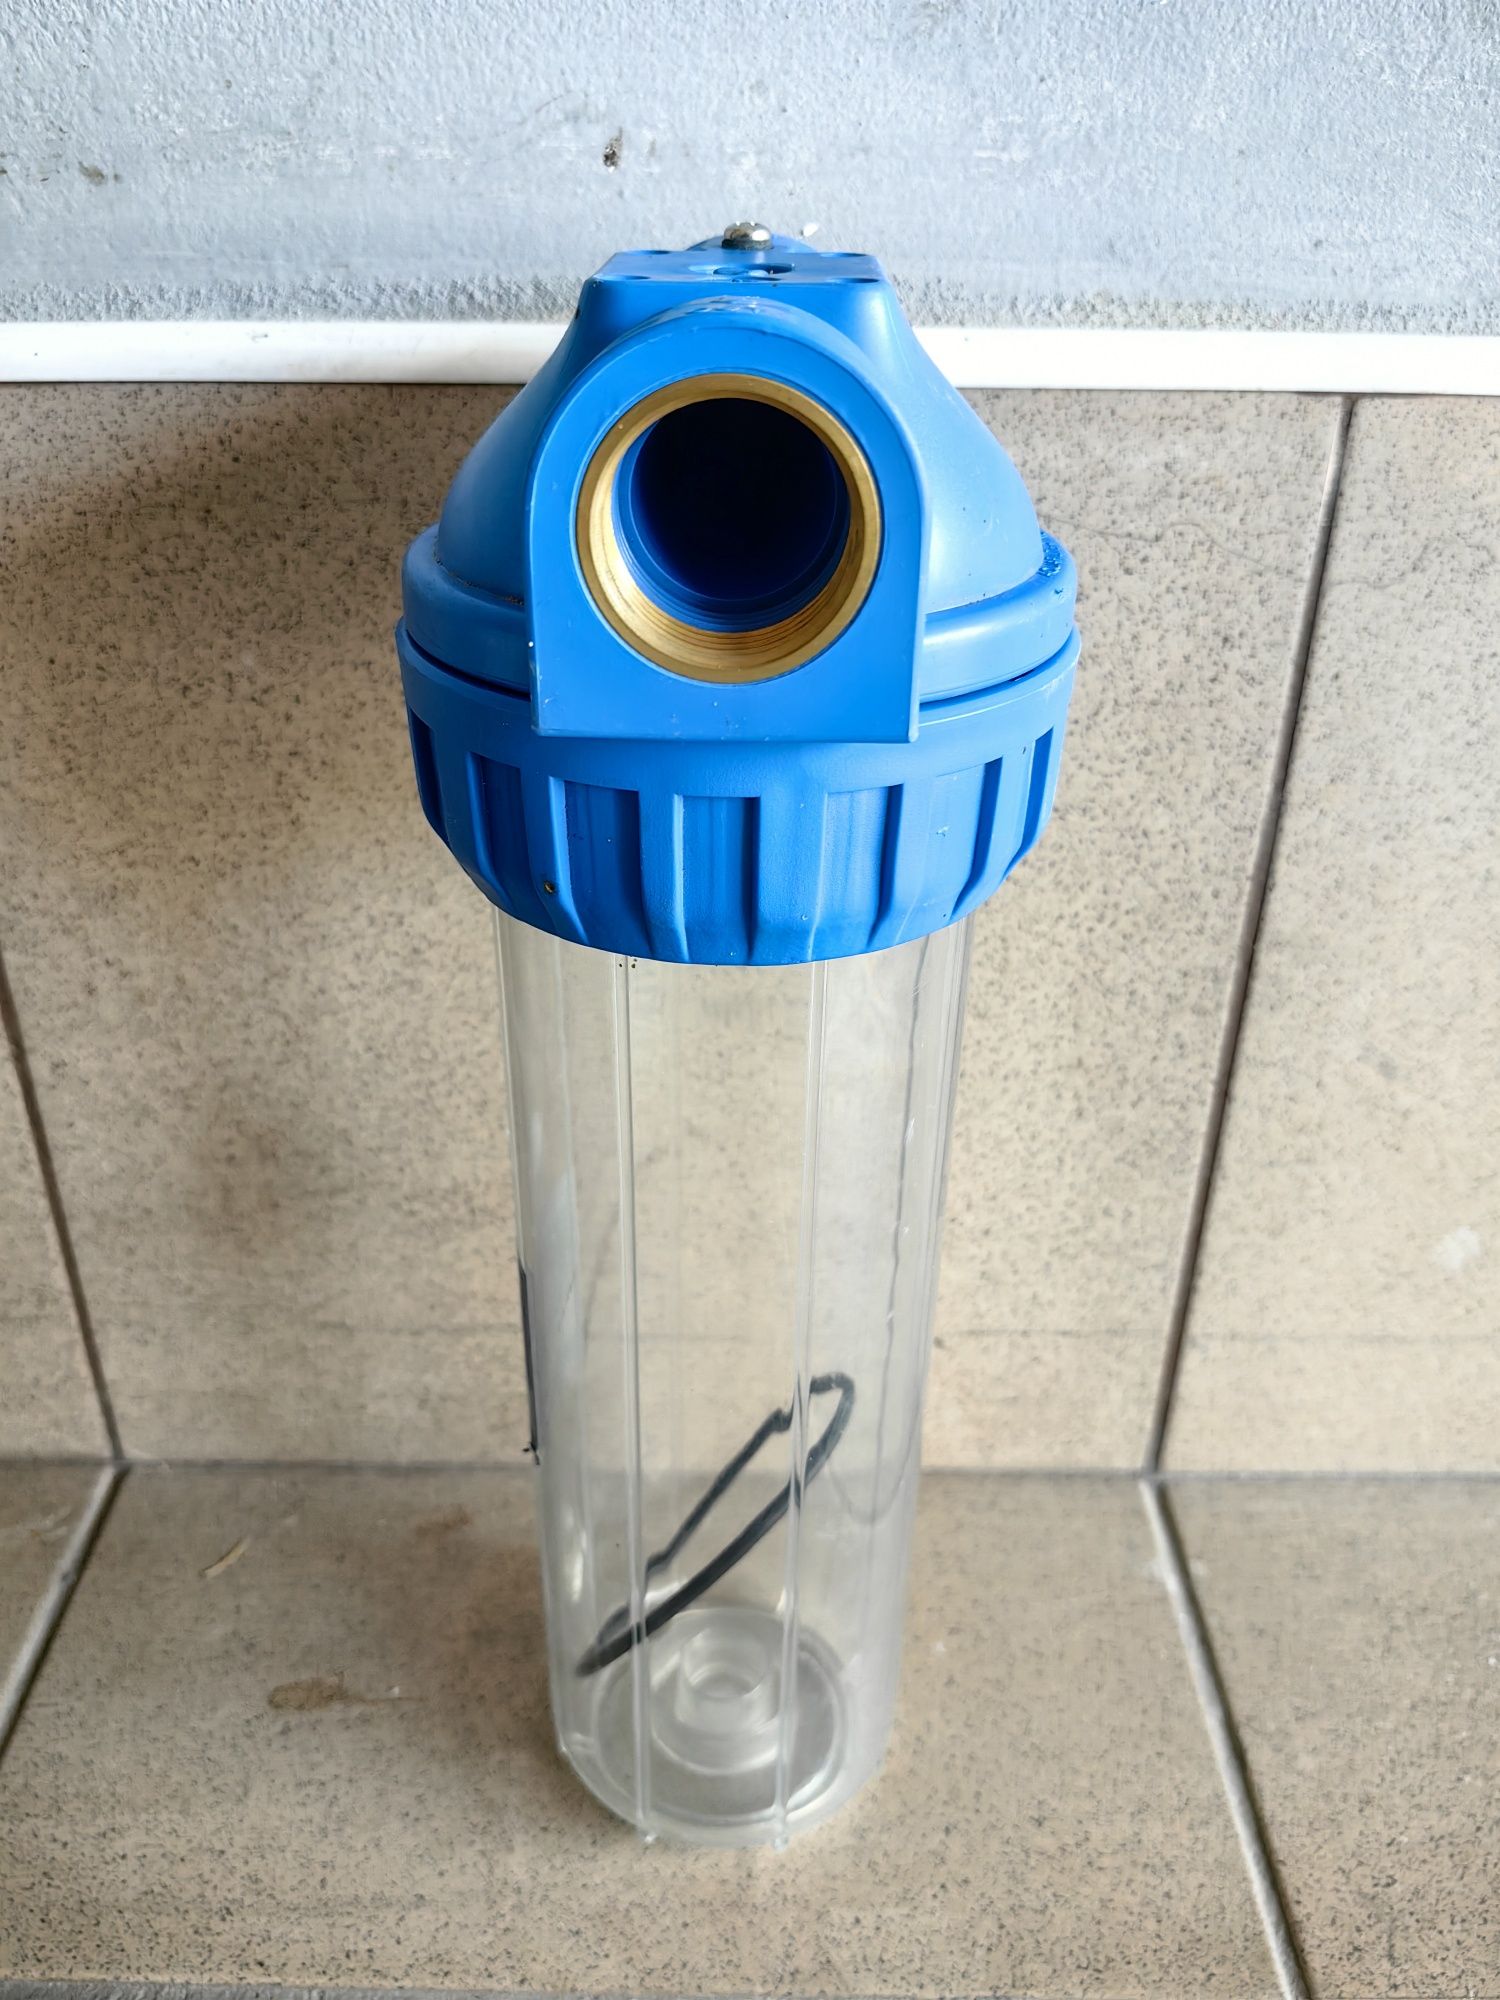 Korpus narurowy Aqua filter